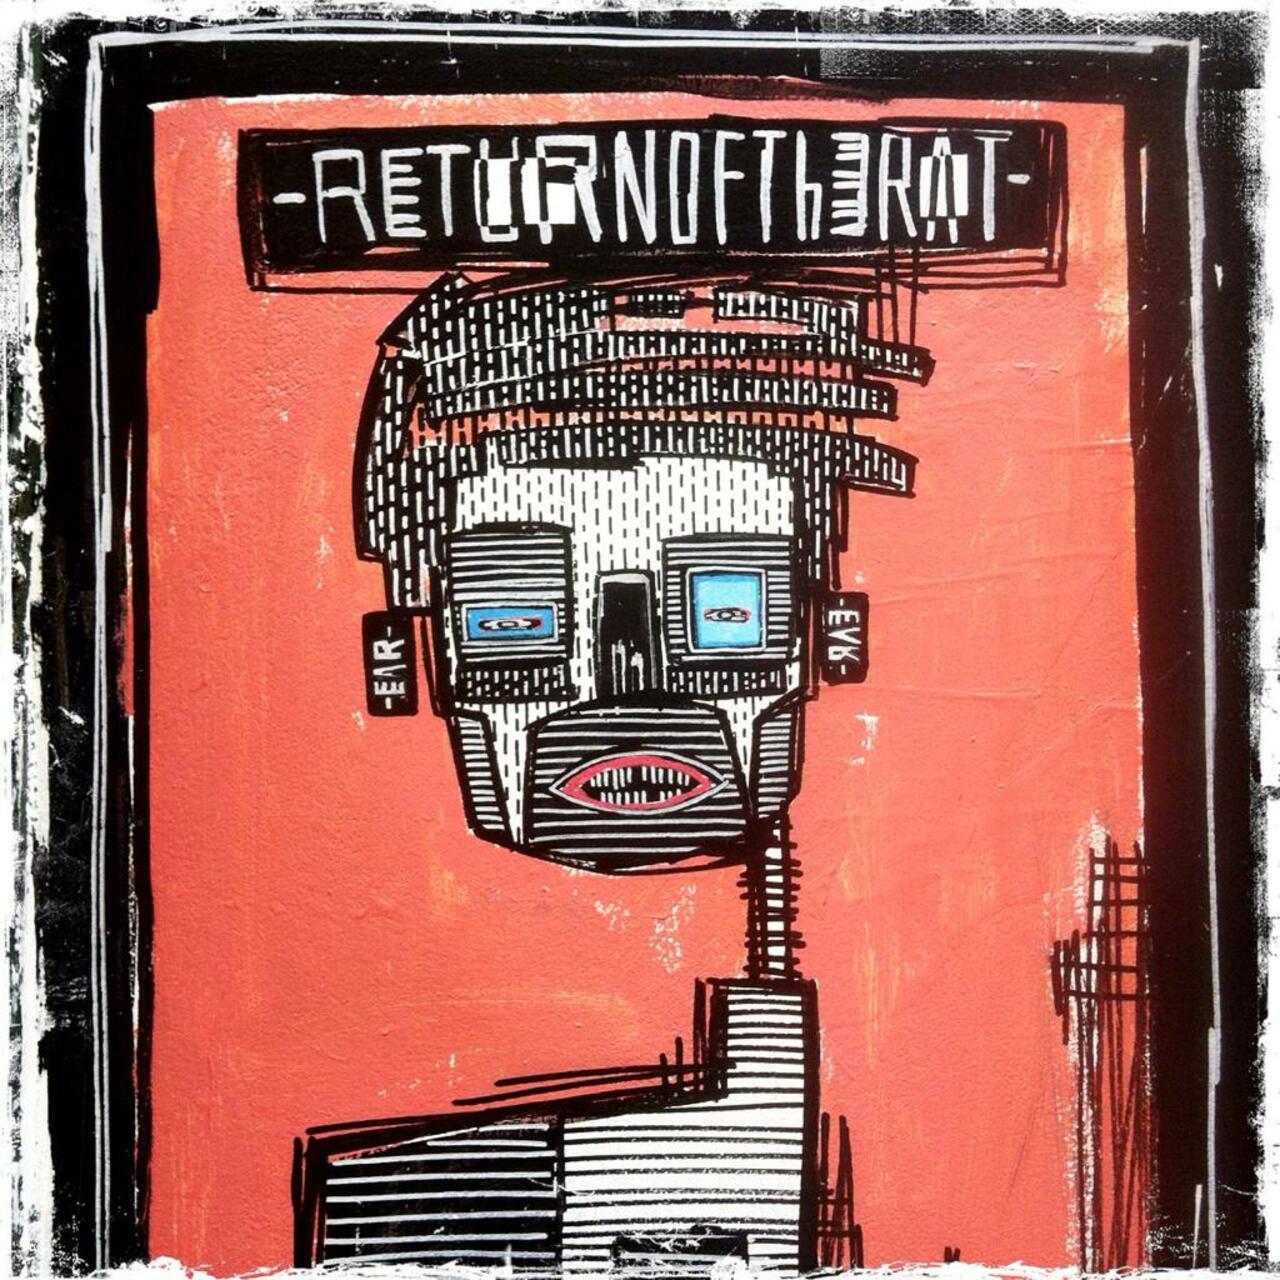 RT @BrickLaneArt: Return of the rat - new #ALO on Peary Place #art #streetart #graffiti @tanyanashphoto http://t.co/iKhASetNdc